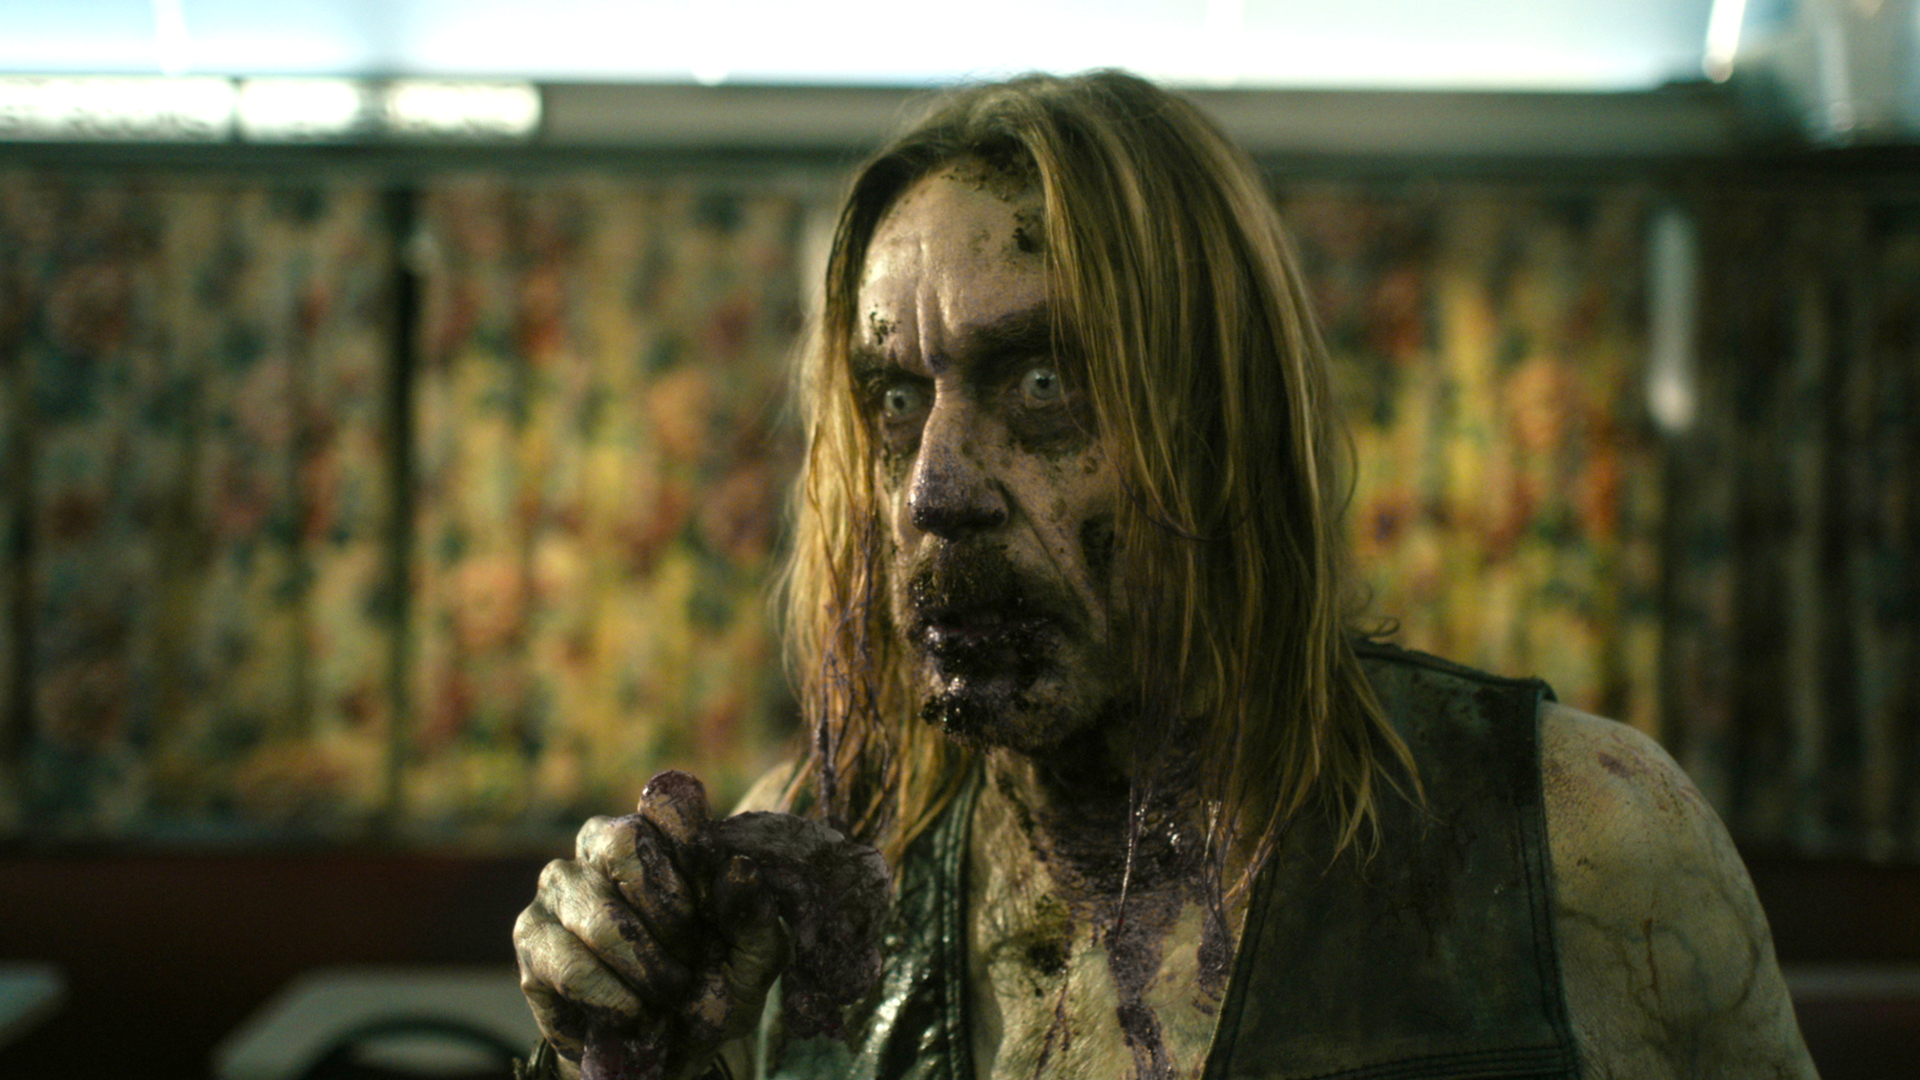 Iggy Pop stars as “Male Coffee Zombie” in writer/director Jim Jarmusch’s ‘The Dead Don’t Die.'